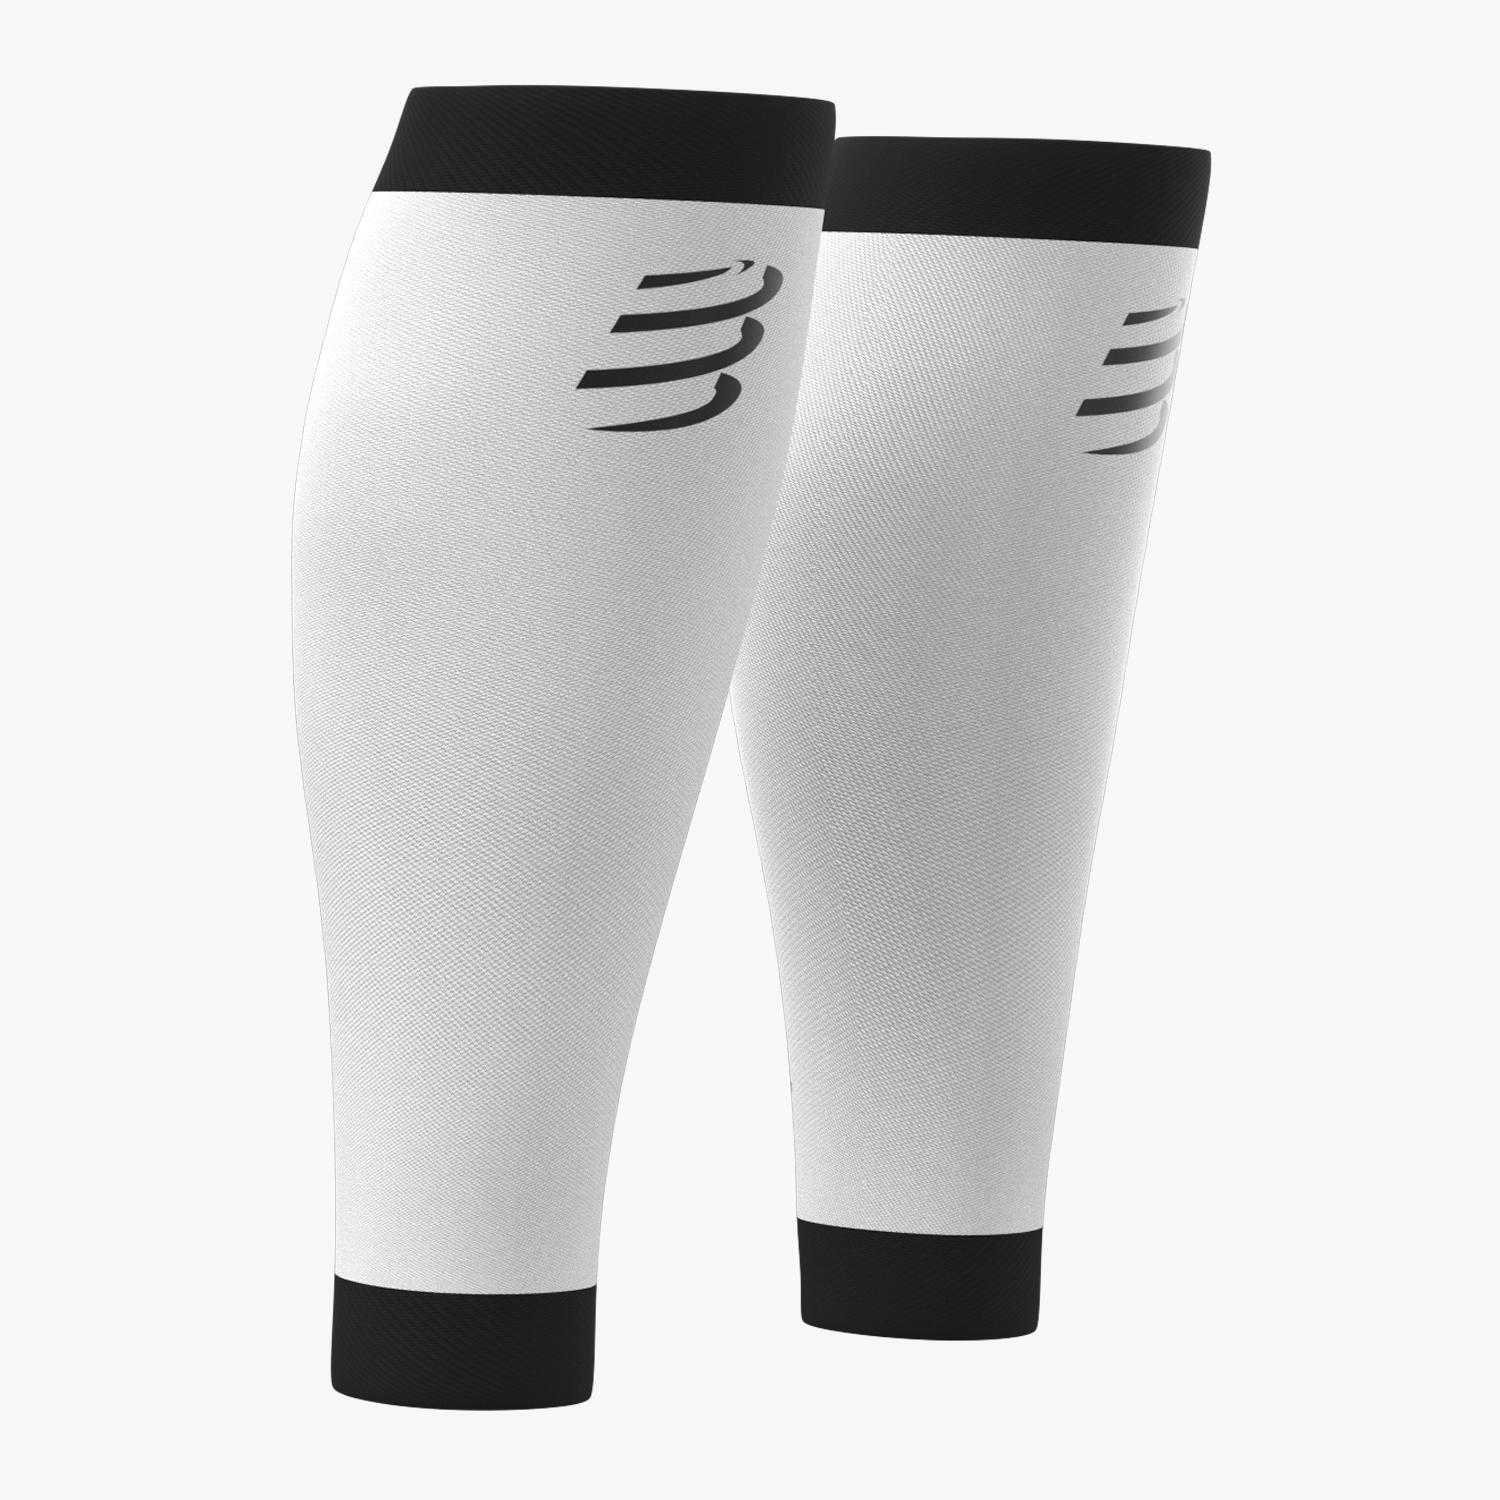 Jambière Compressport - Blanc - Jambières de compression Running sports taille S